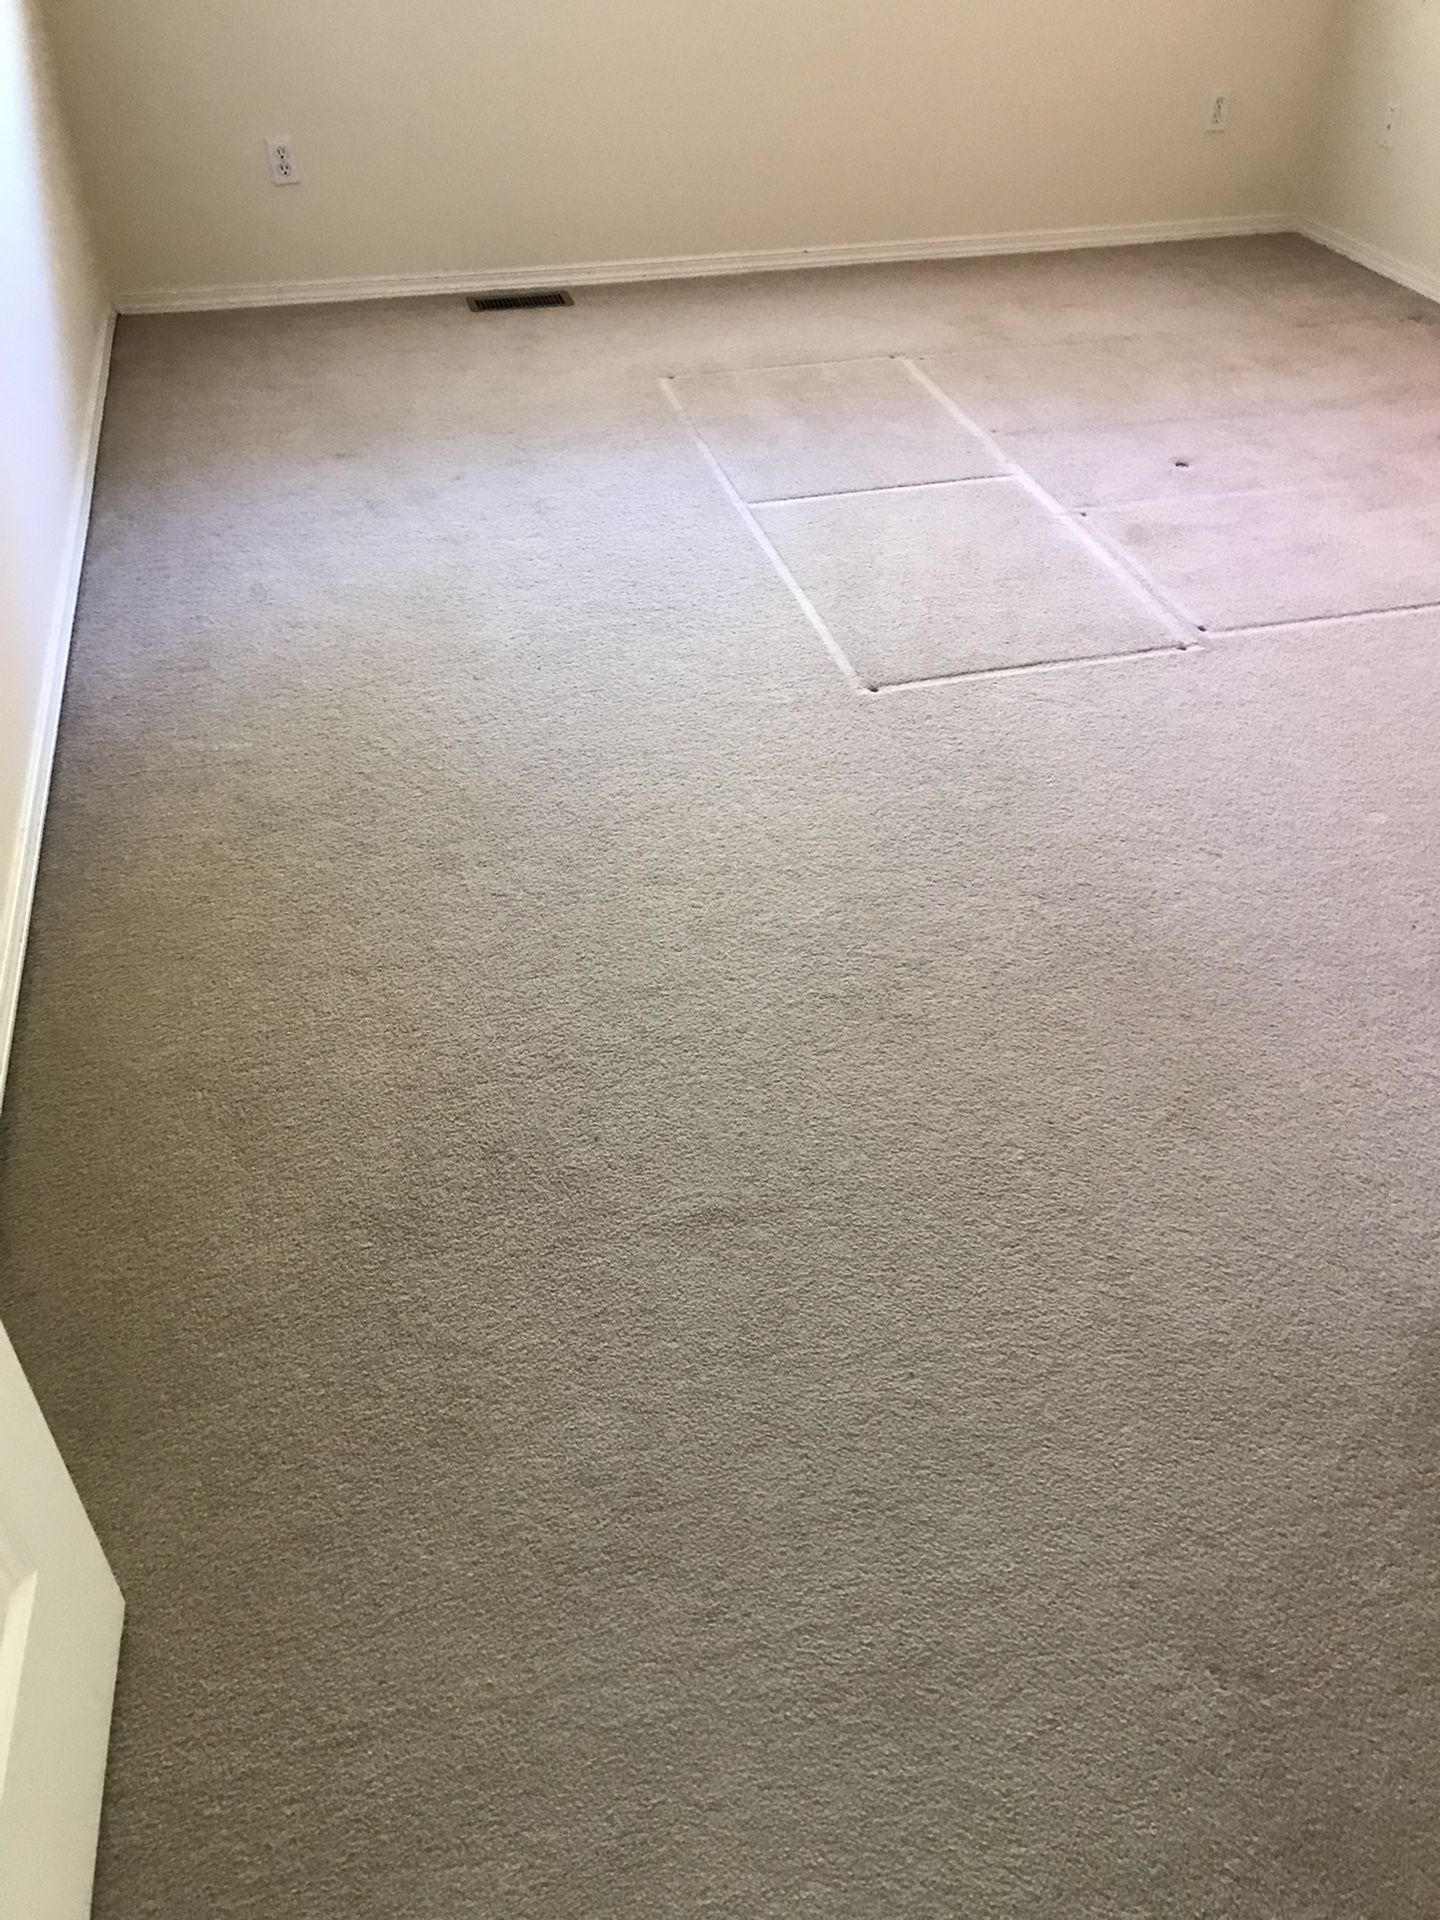 Free Carpet And Under Carpet